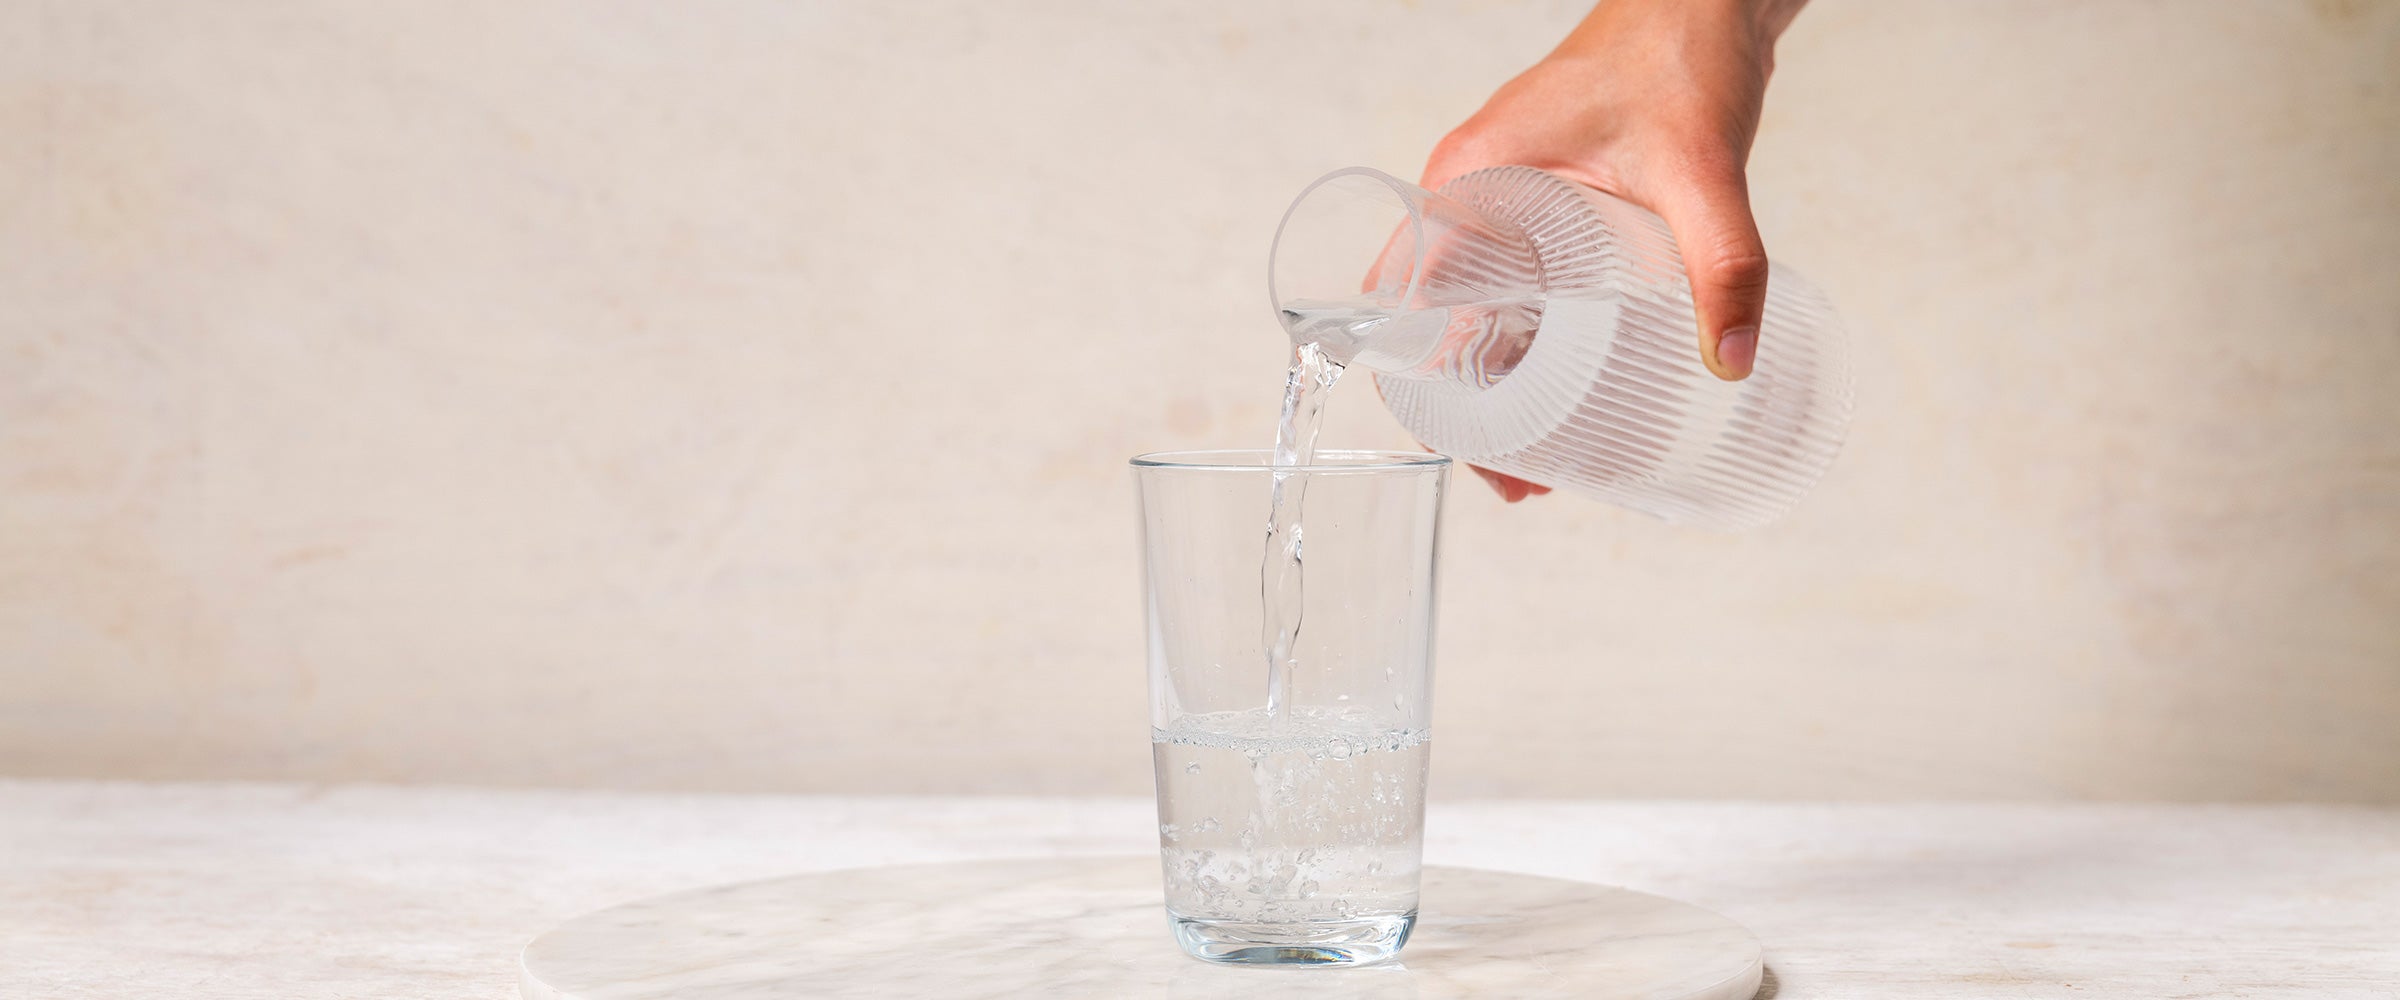 5 motivi per bere più acqua: bevi abbastanza?